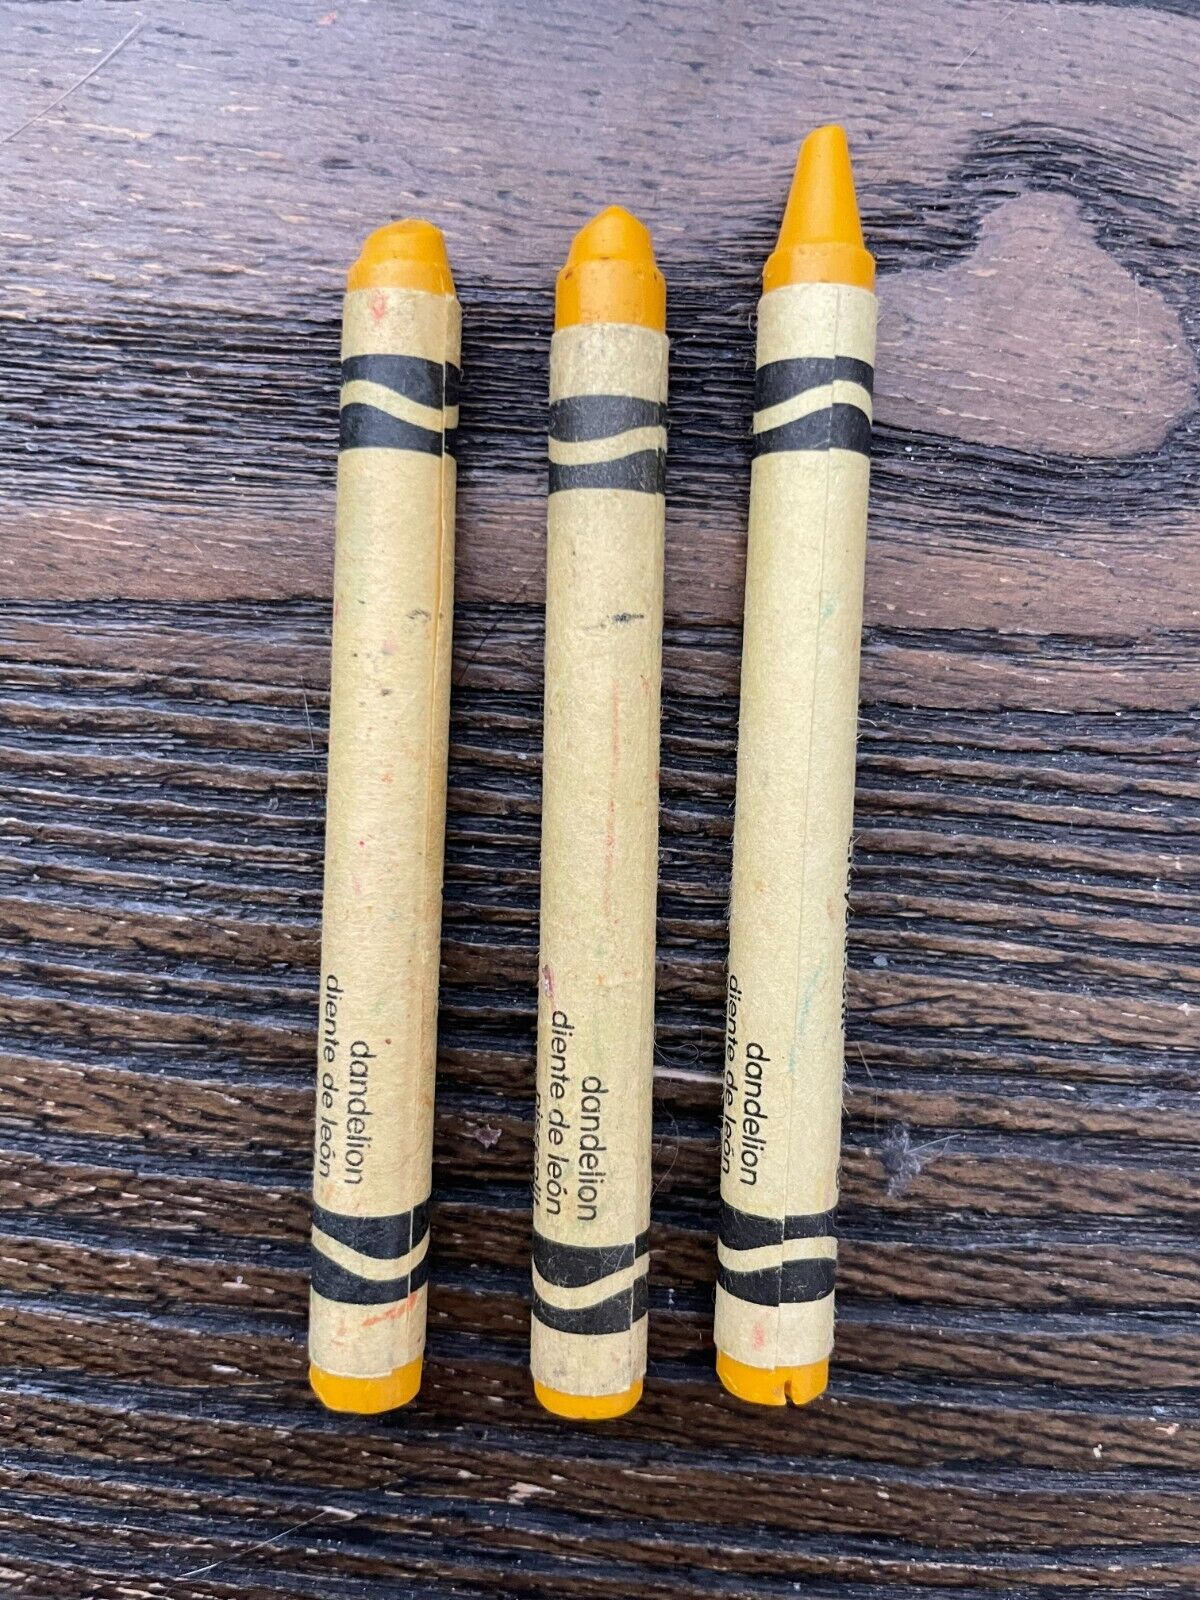 Lot of 3 Retired Crayola DANDELION Crayons Rare Discontinued Color